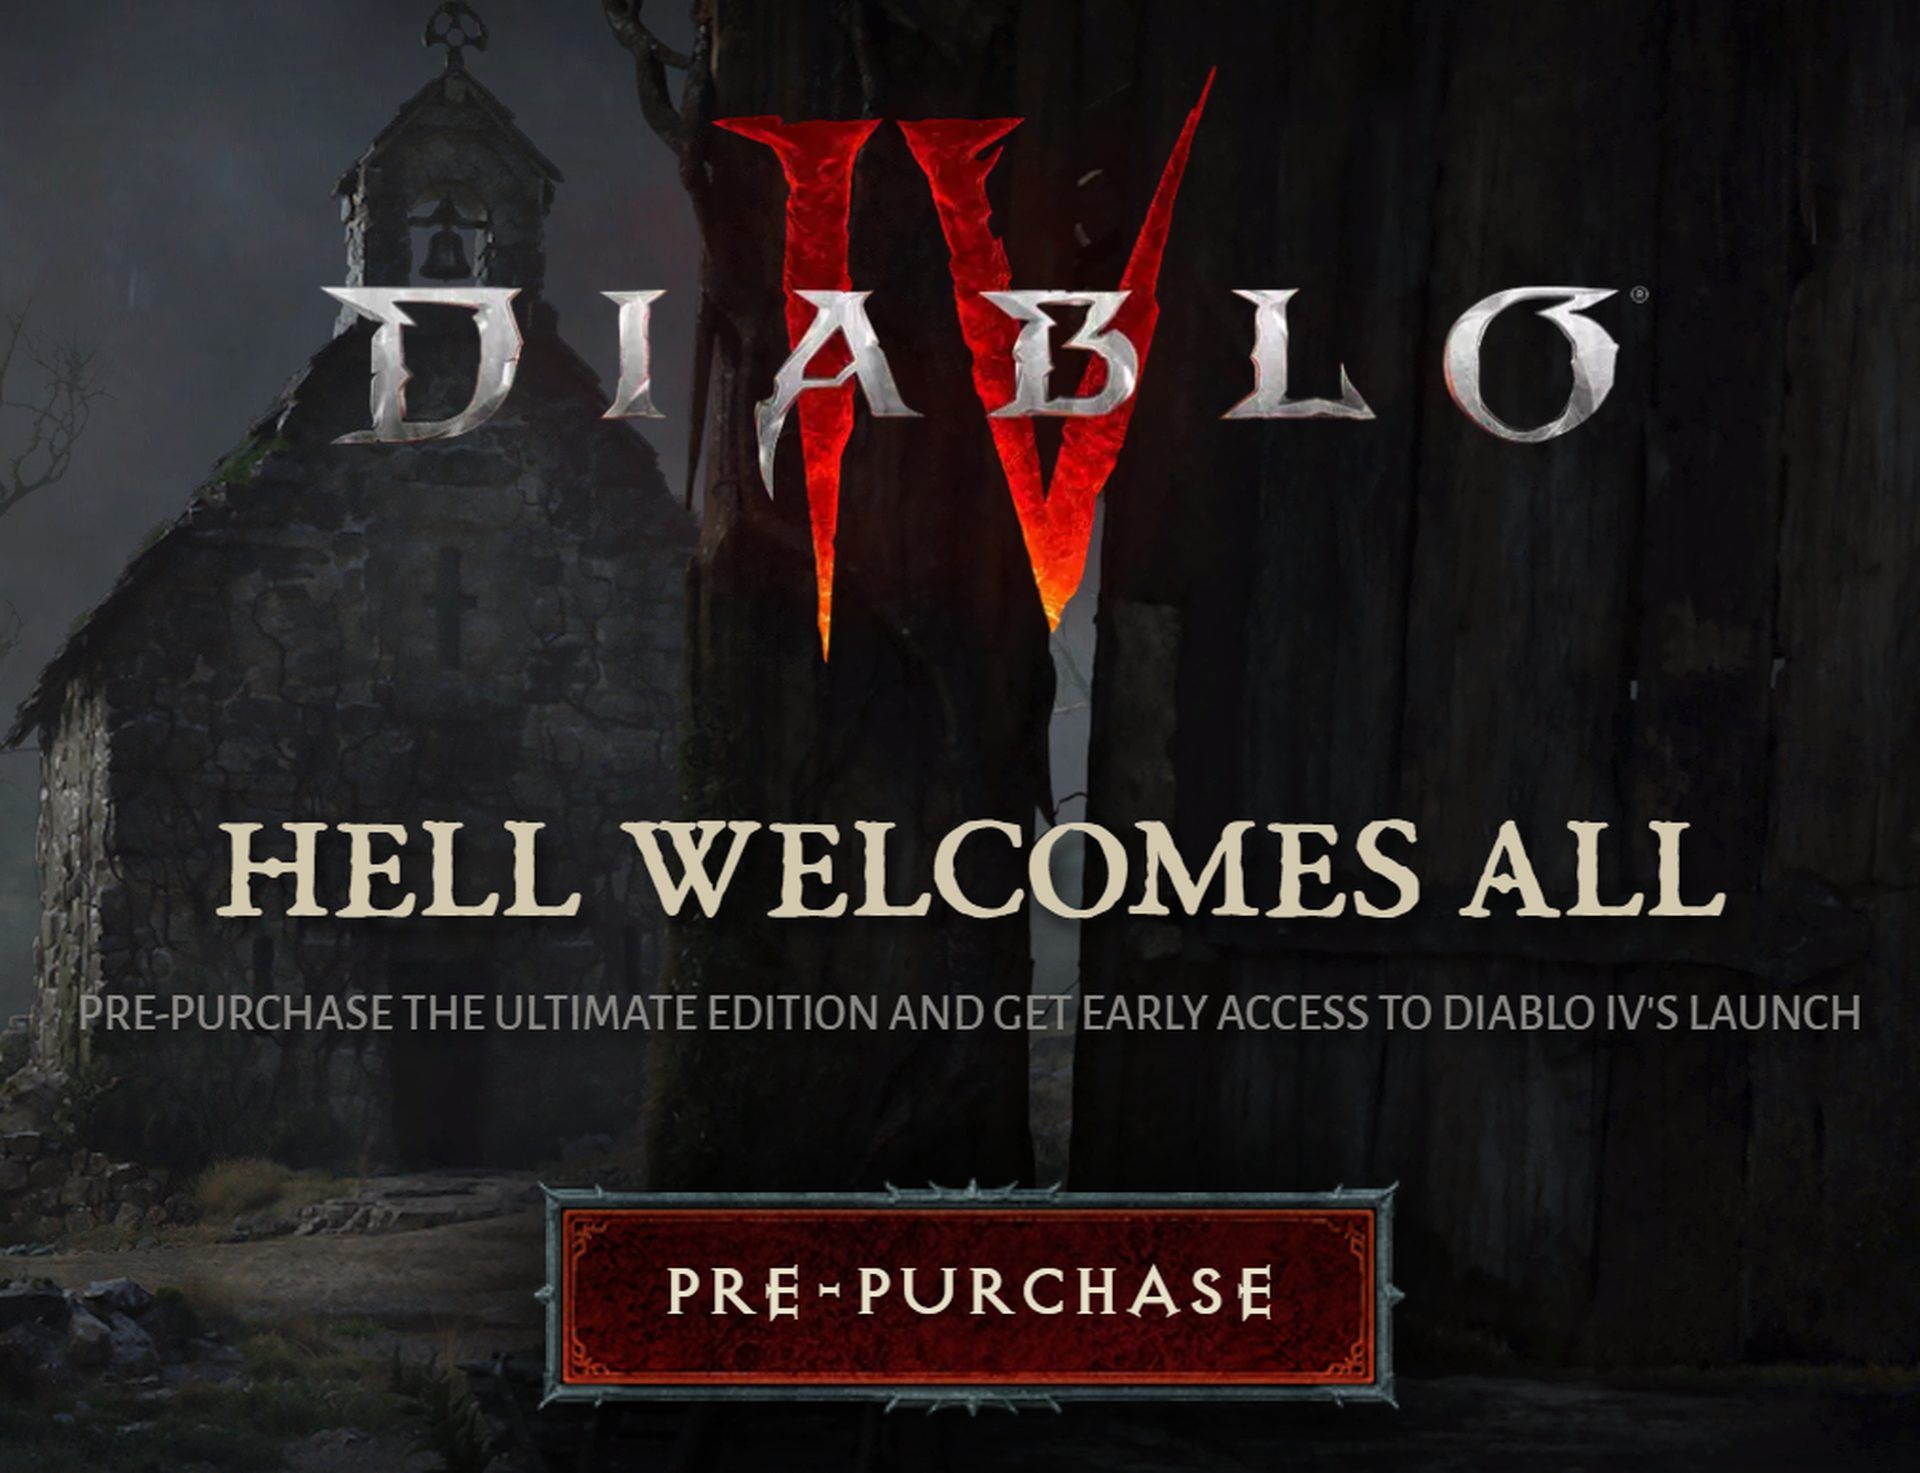 Diablo 4 preorder bonuses, release date, and more